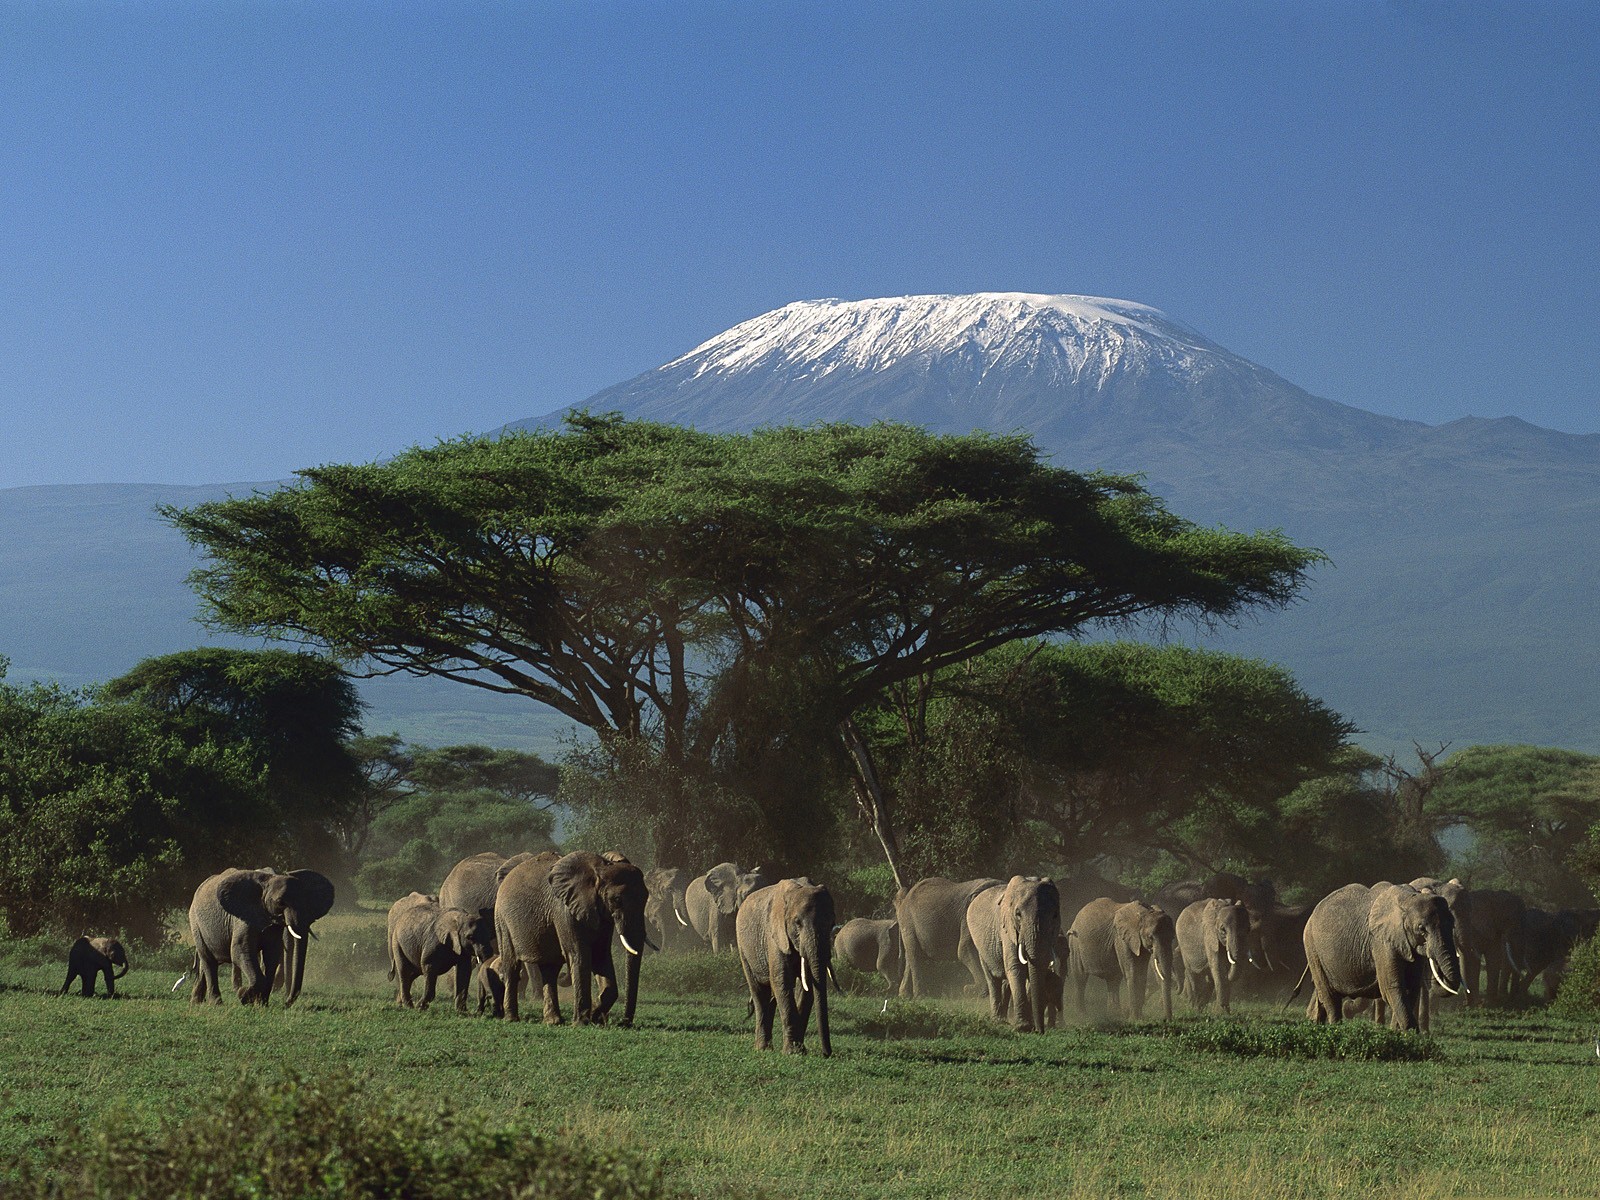 General 1600x1200 animals elephant mountains Kenya trees mammals wildlife Africa volcano nature